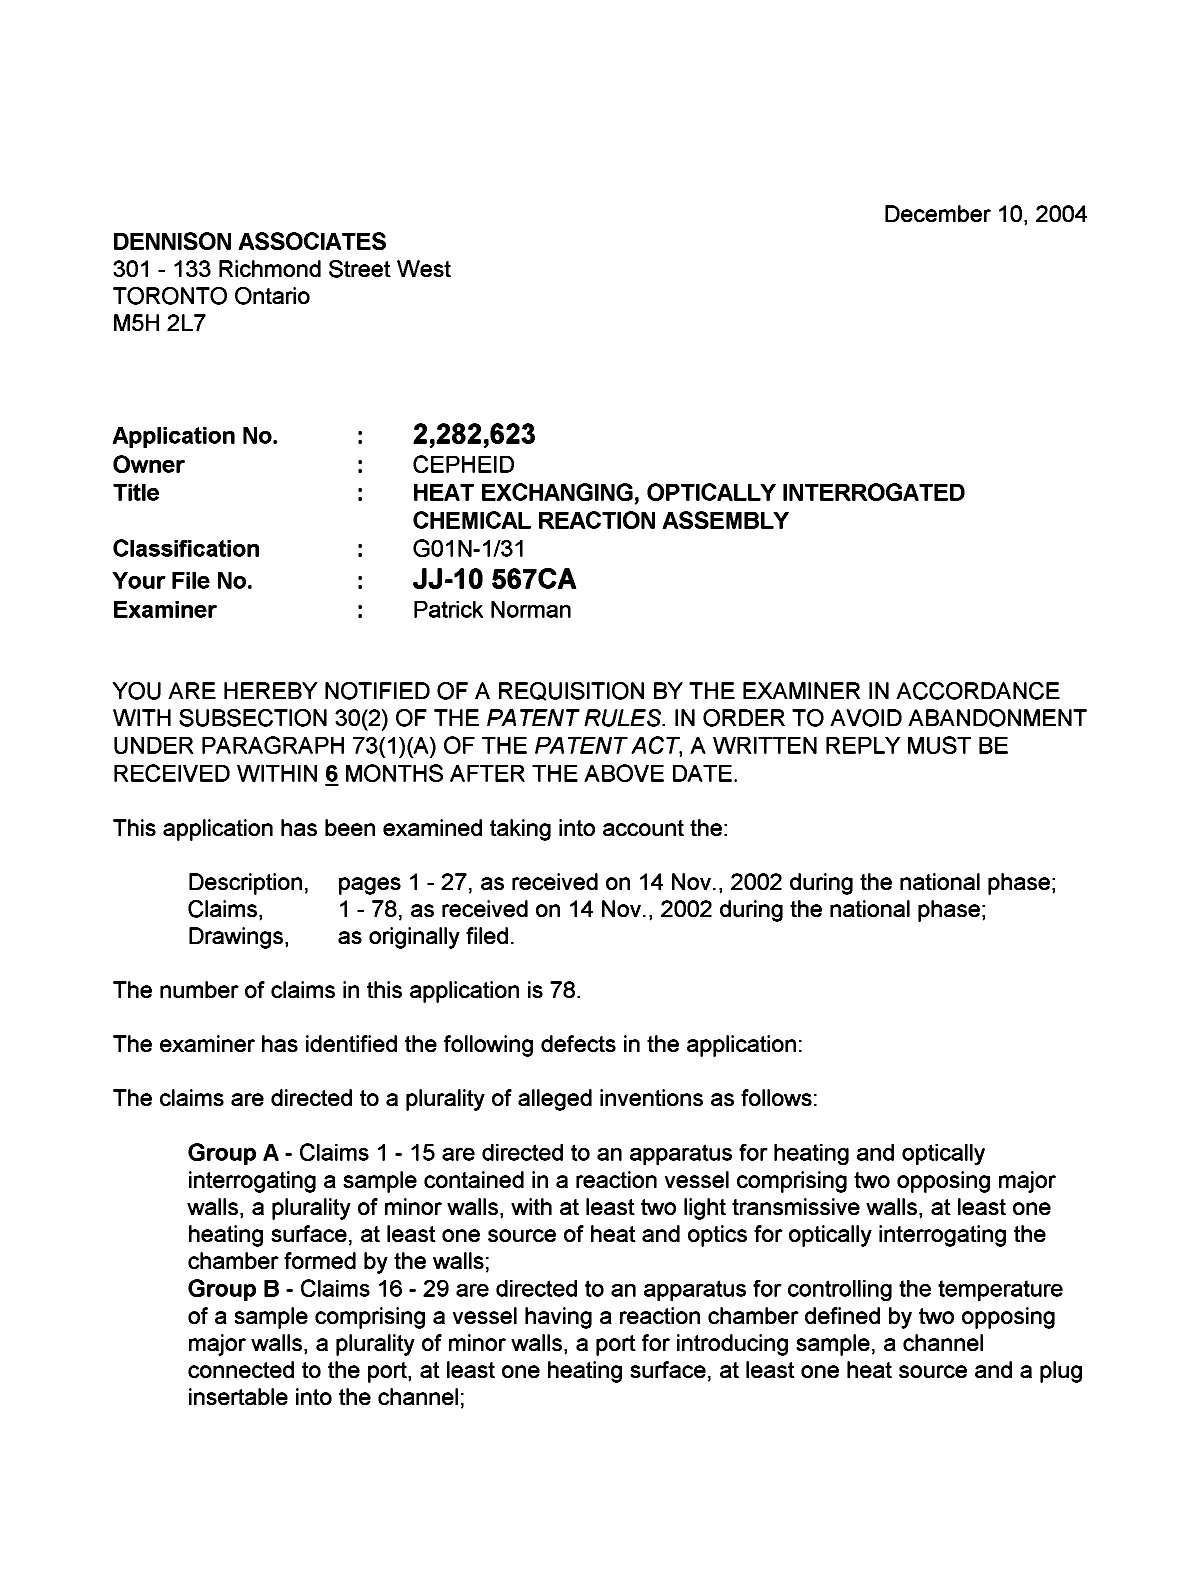 Canadian Patent Document 2282623. Prosecution-Amendment 20041210. Image 1 of 3